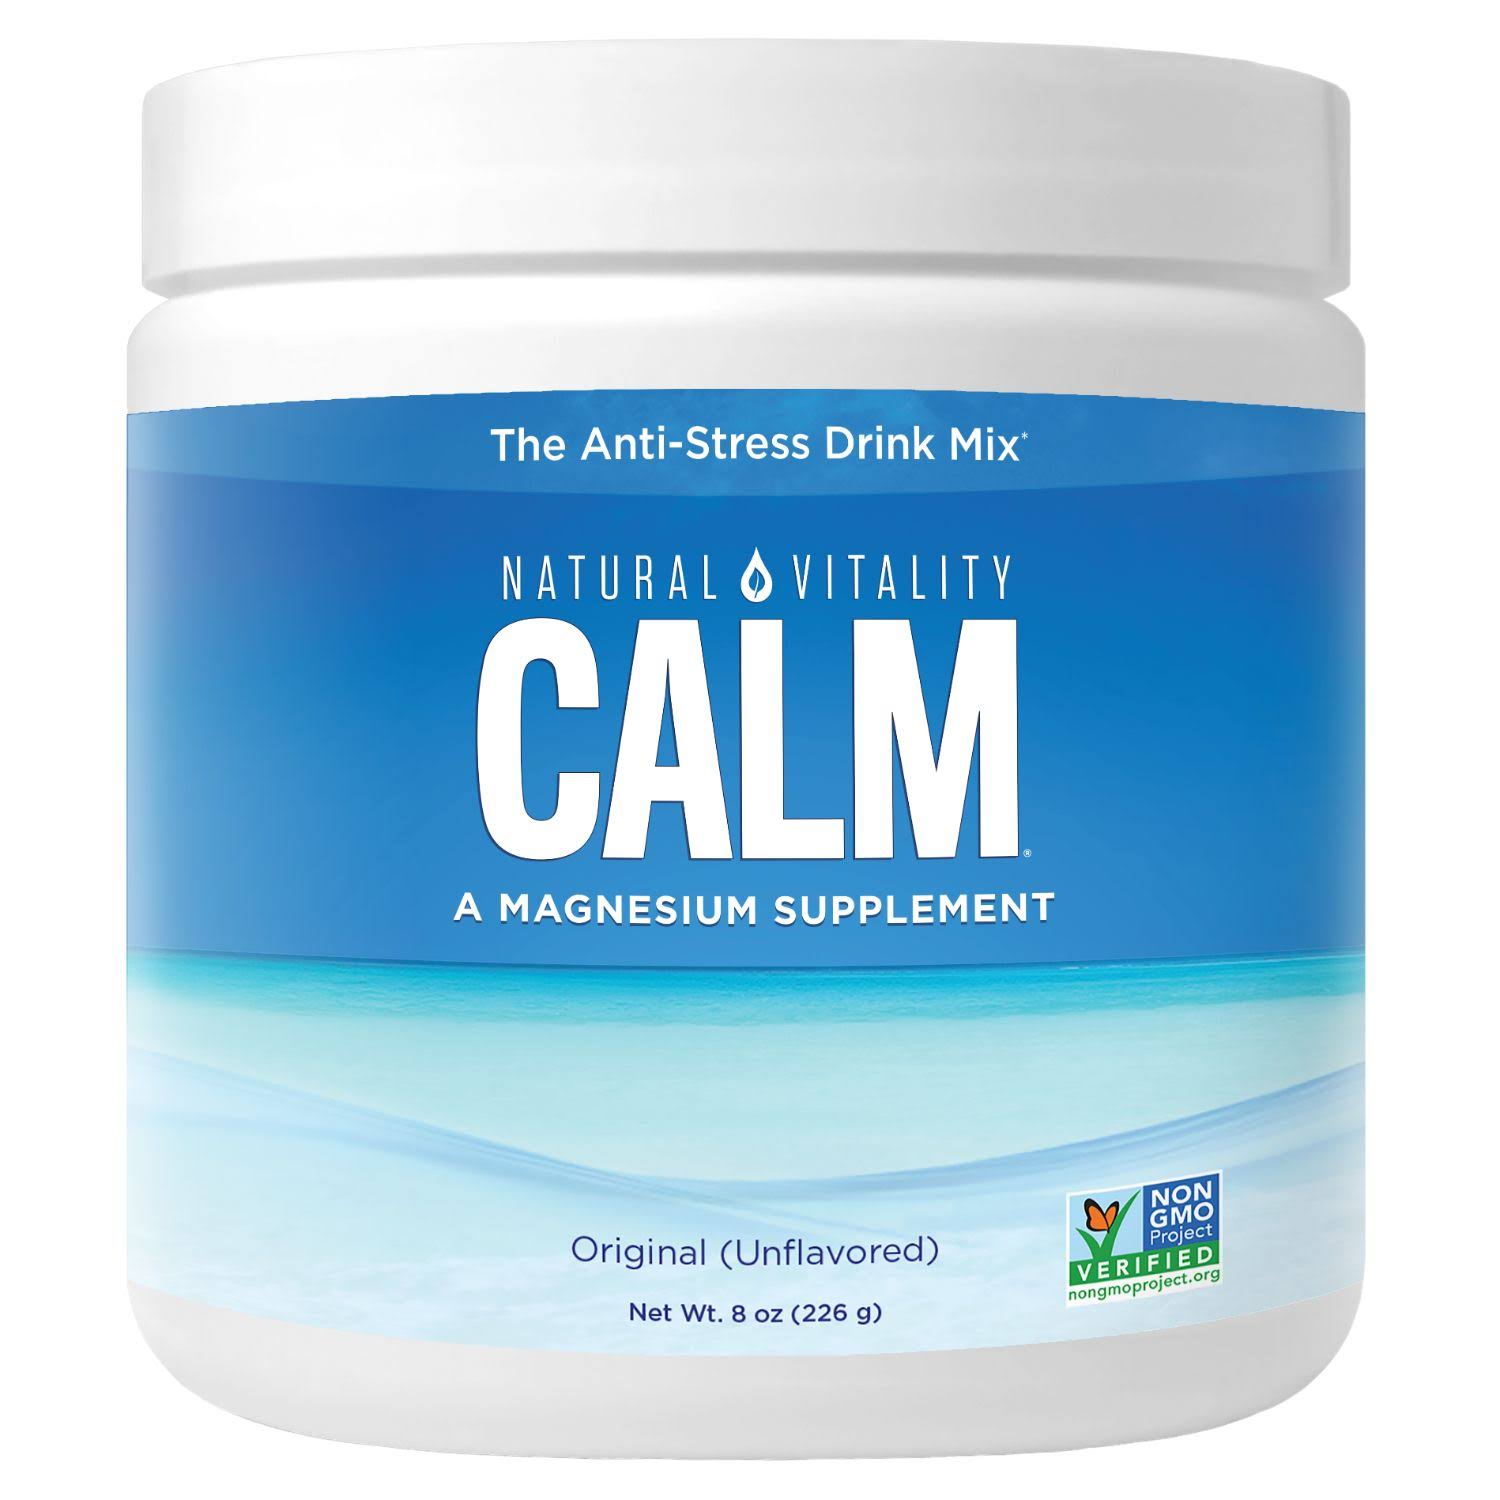 Natural Vitality Calm Anti-Stress Drink Mix, Original (Unflavored) - 8 oz